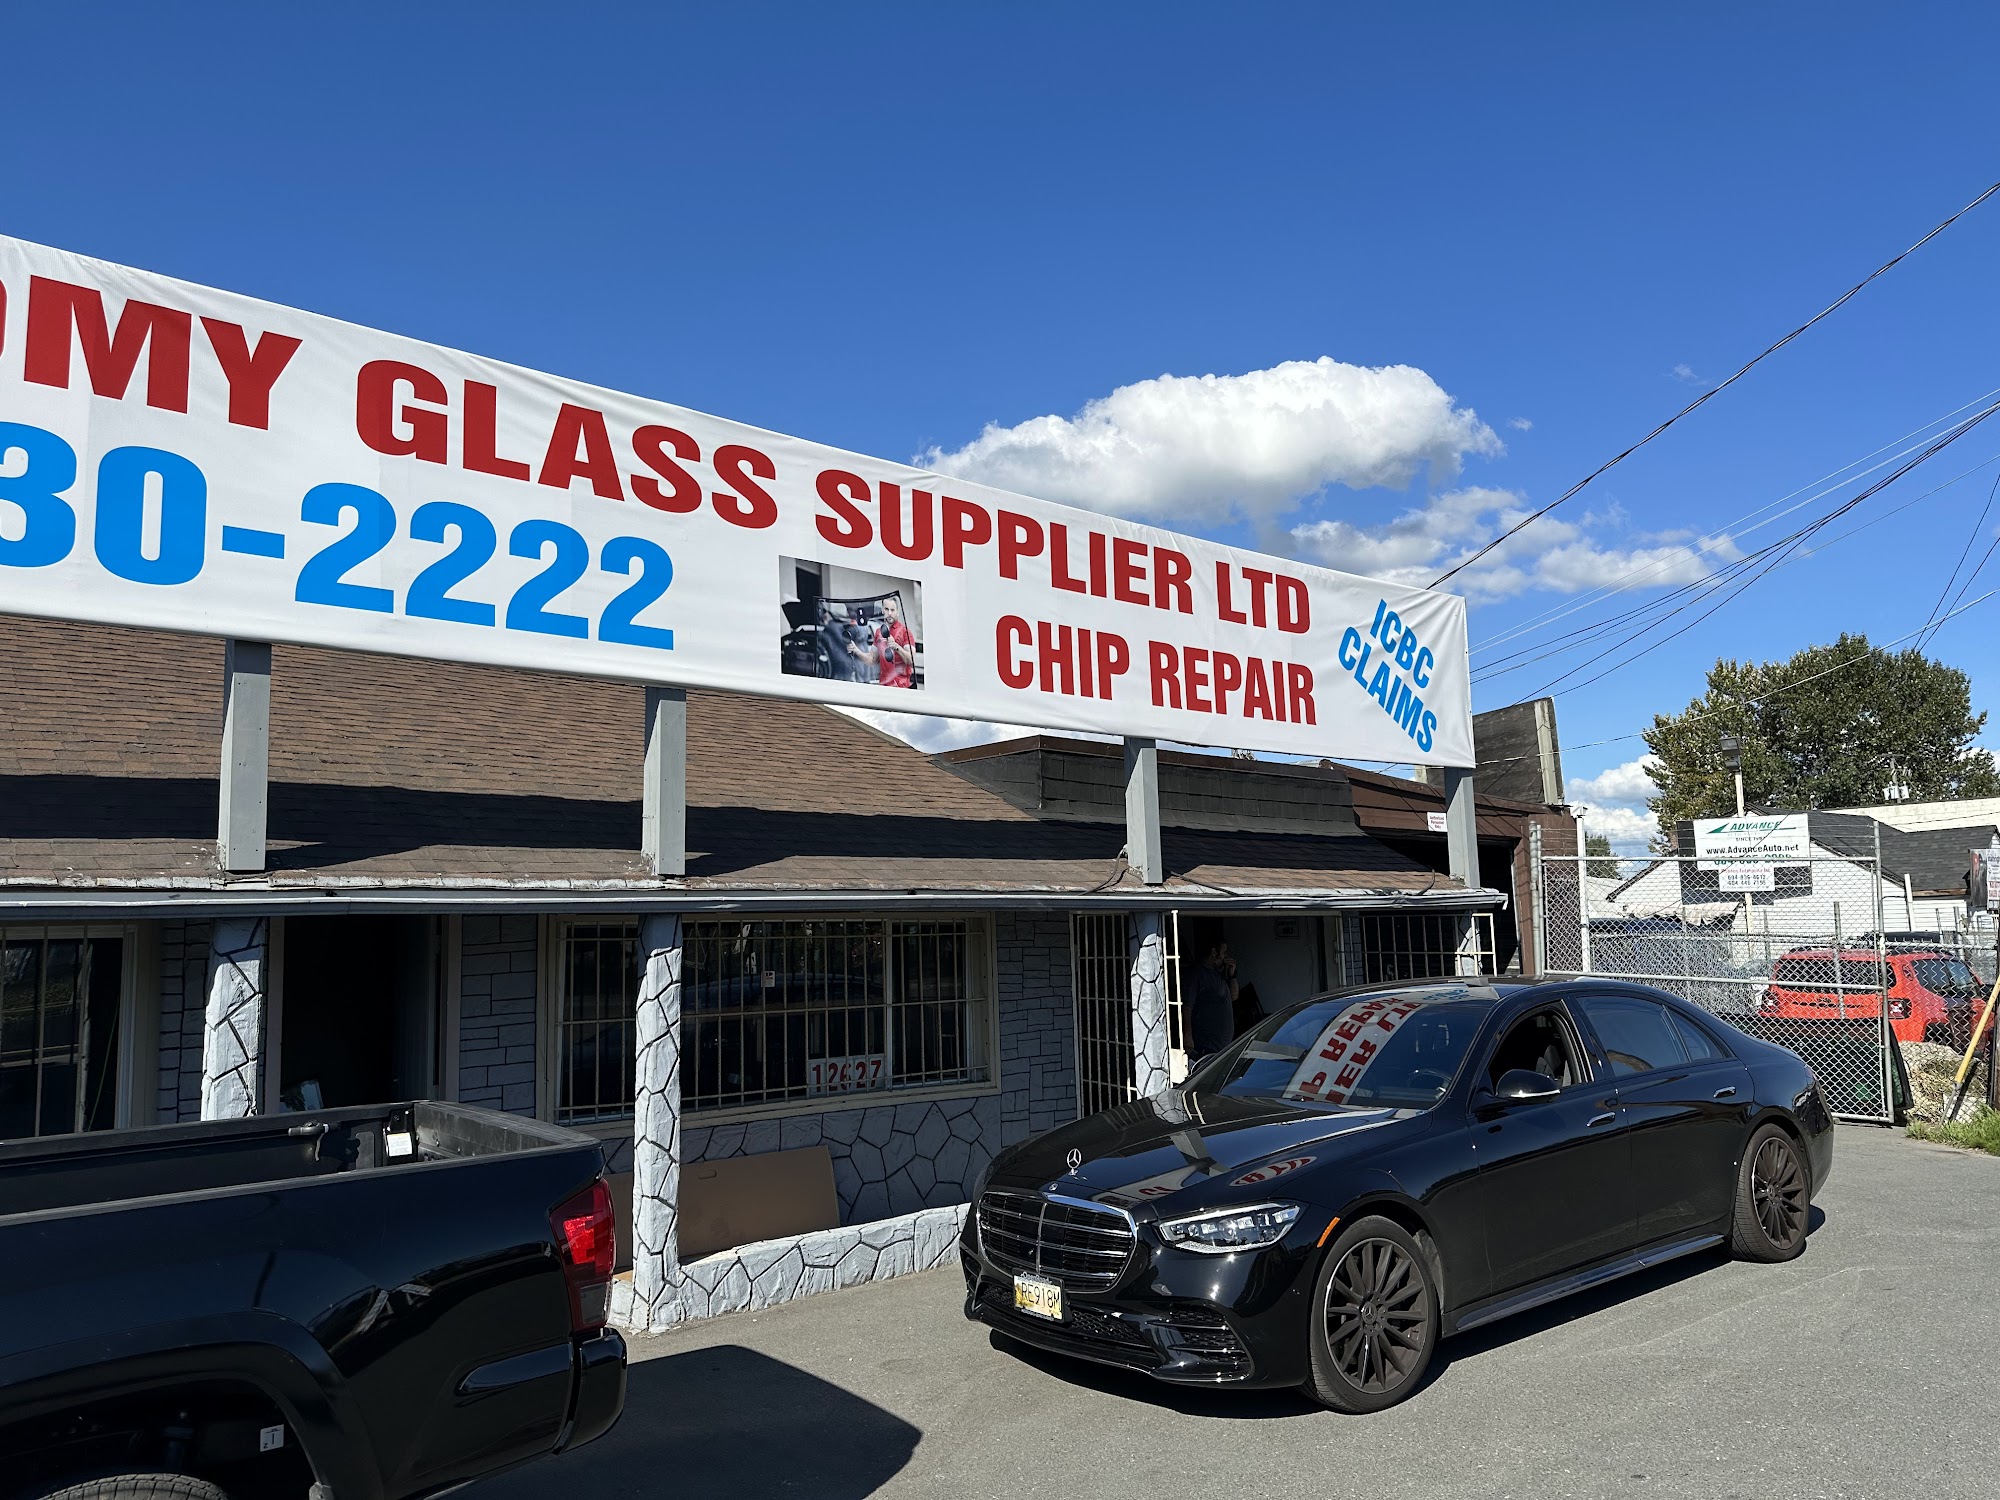 Economy Glass Supplier Ltd